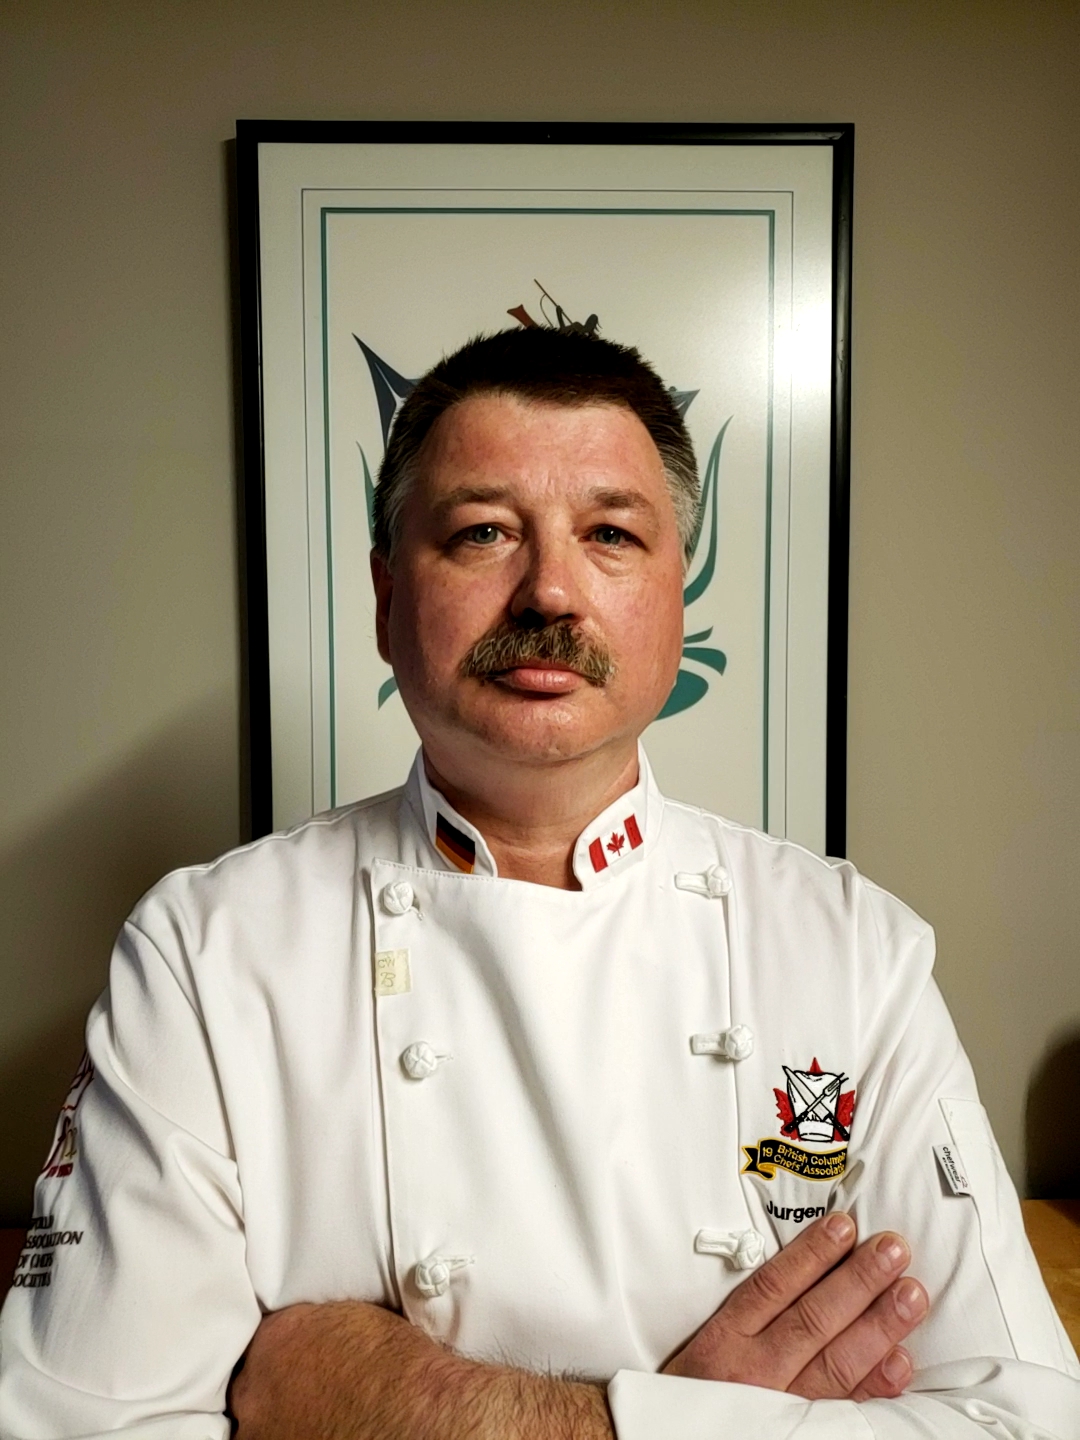 Jurgen Birk - Executive Chef